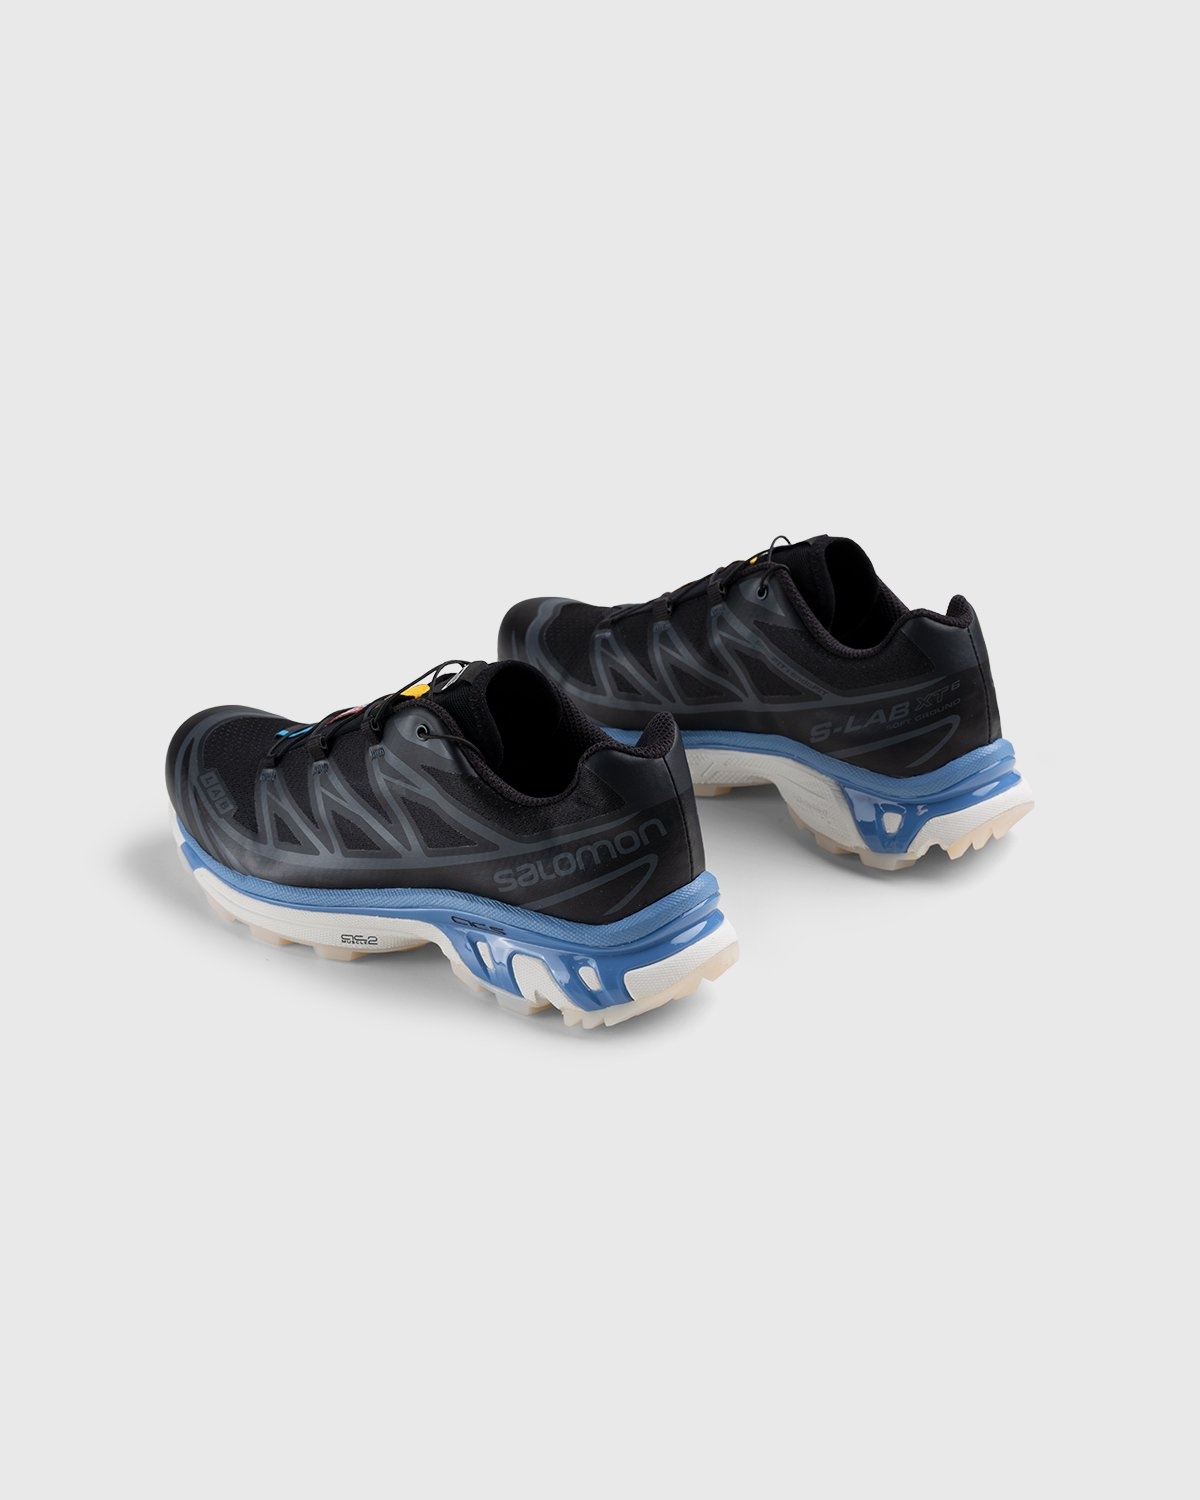 Salomon – XT-6 Clear Black/Riviera/Nimbus Cloud - Low Top Sneakers - Black - Image 4